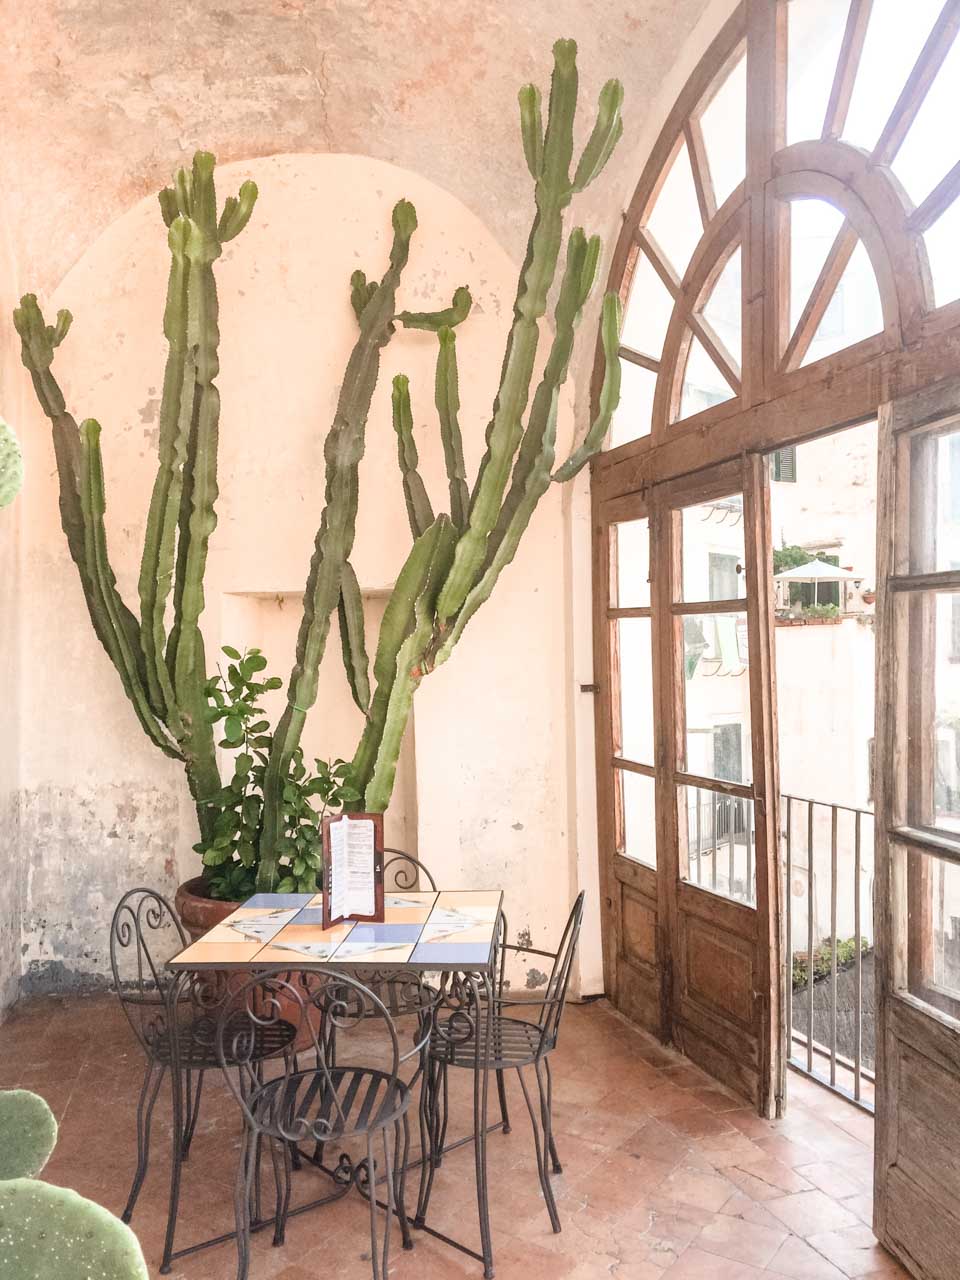 A cactus and a table at a café inside Giardino della Minerva